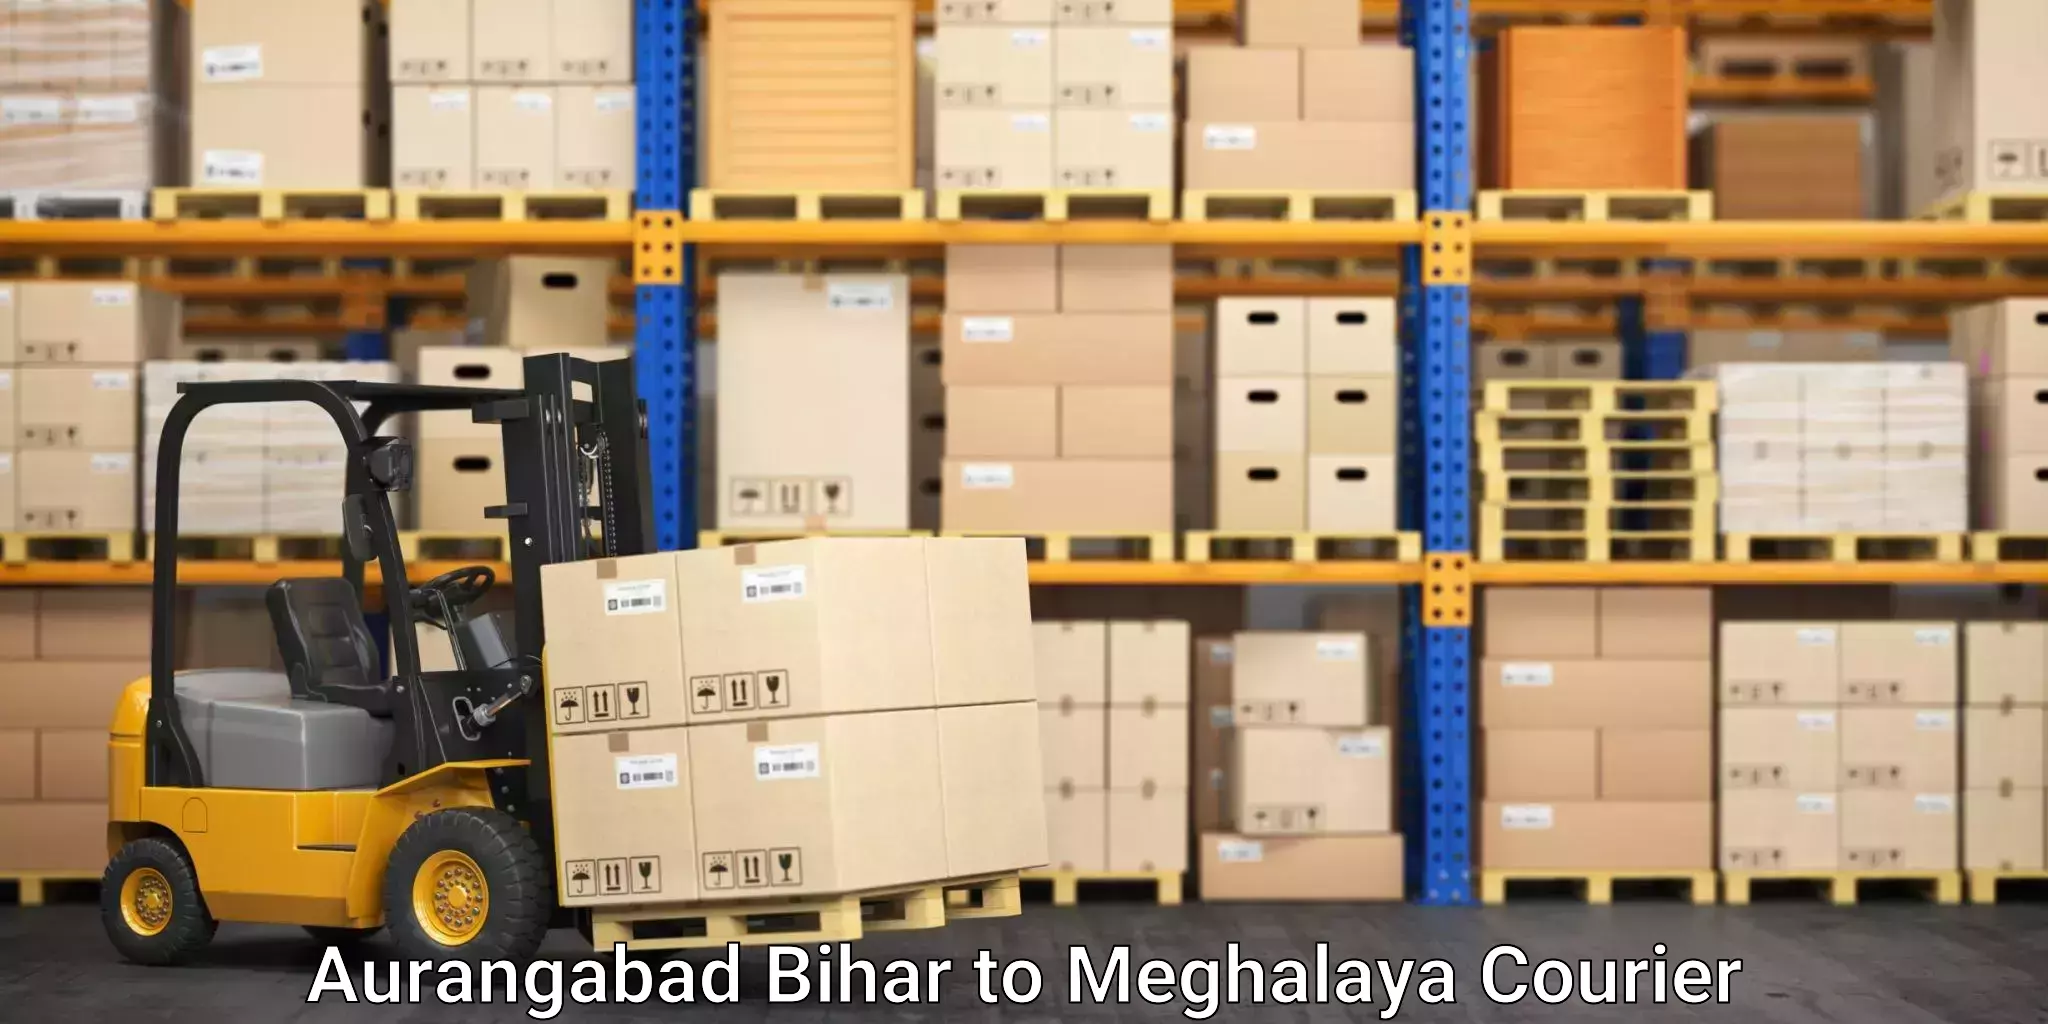 Expert relocation solutions Aurangabad Bihar to Meghalaya